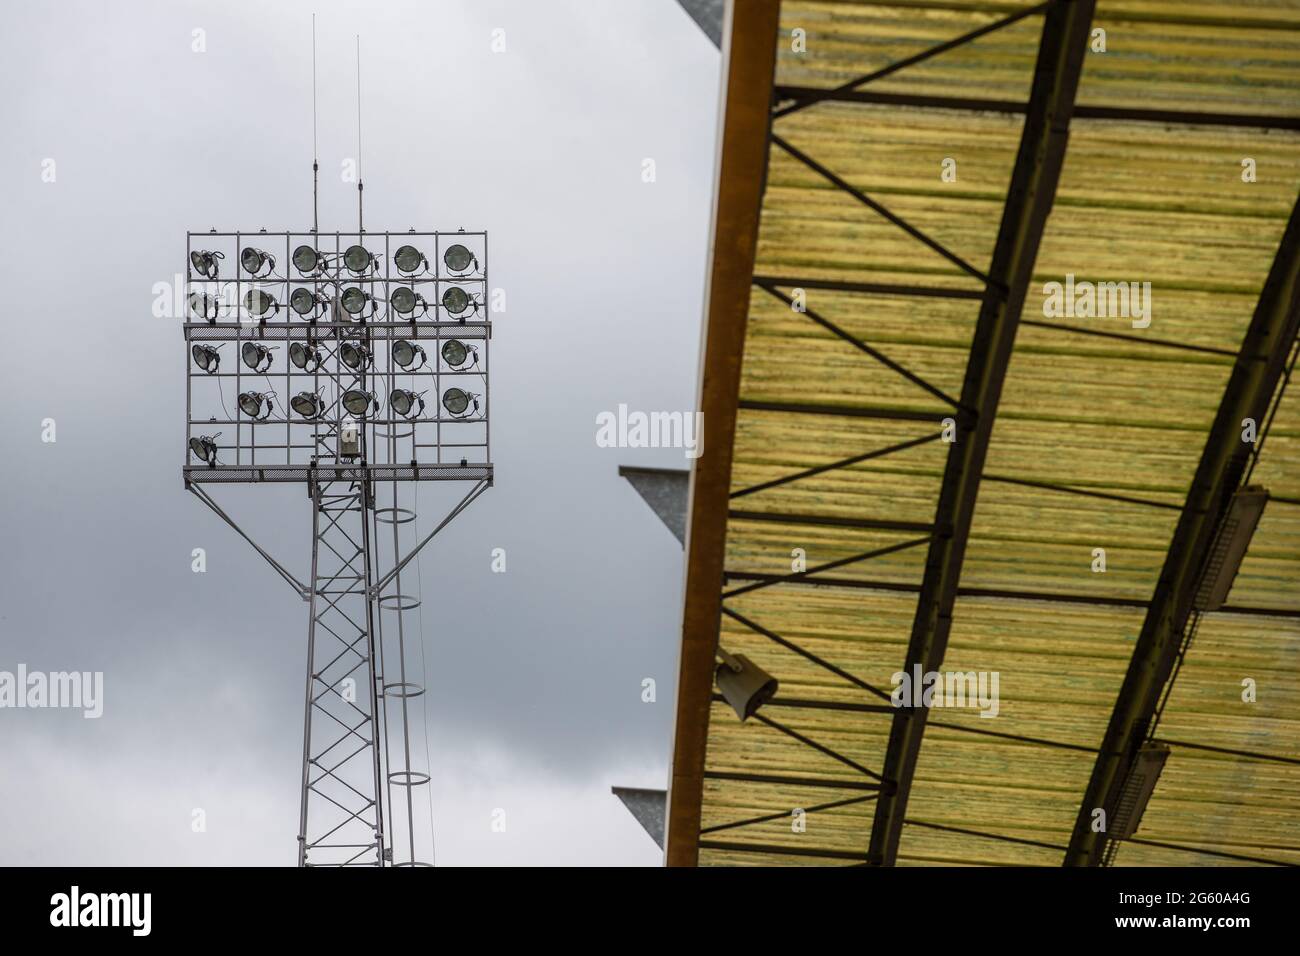 Traditional floodlight at football stadium in England, UK Stock Photo